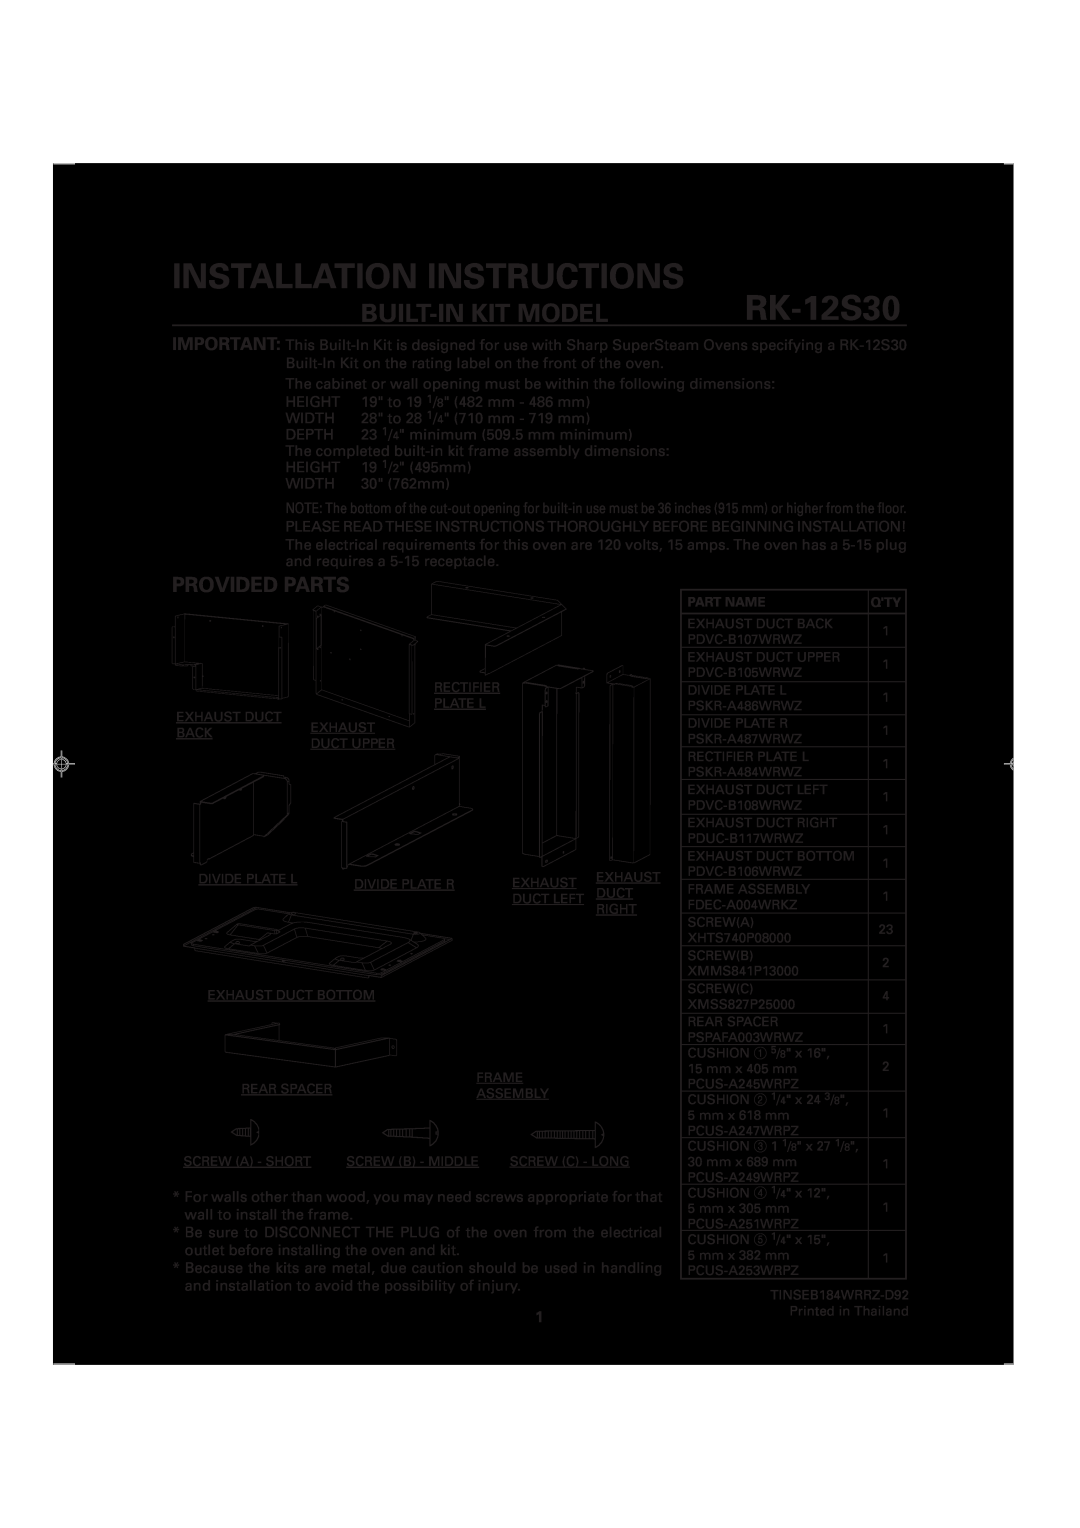 Sharp RK-12S30 installation instructions Provided Parts, Installation Instructions, Built-In Kit Model 